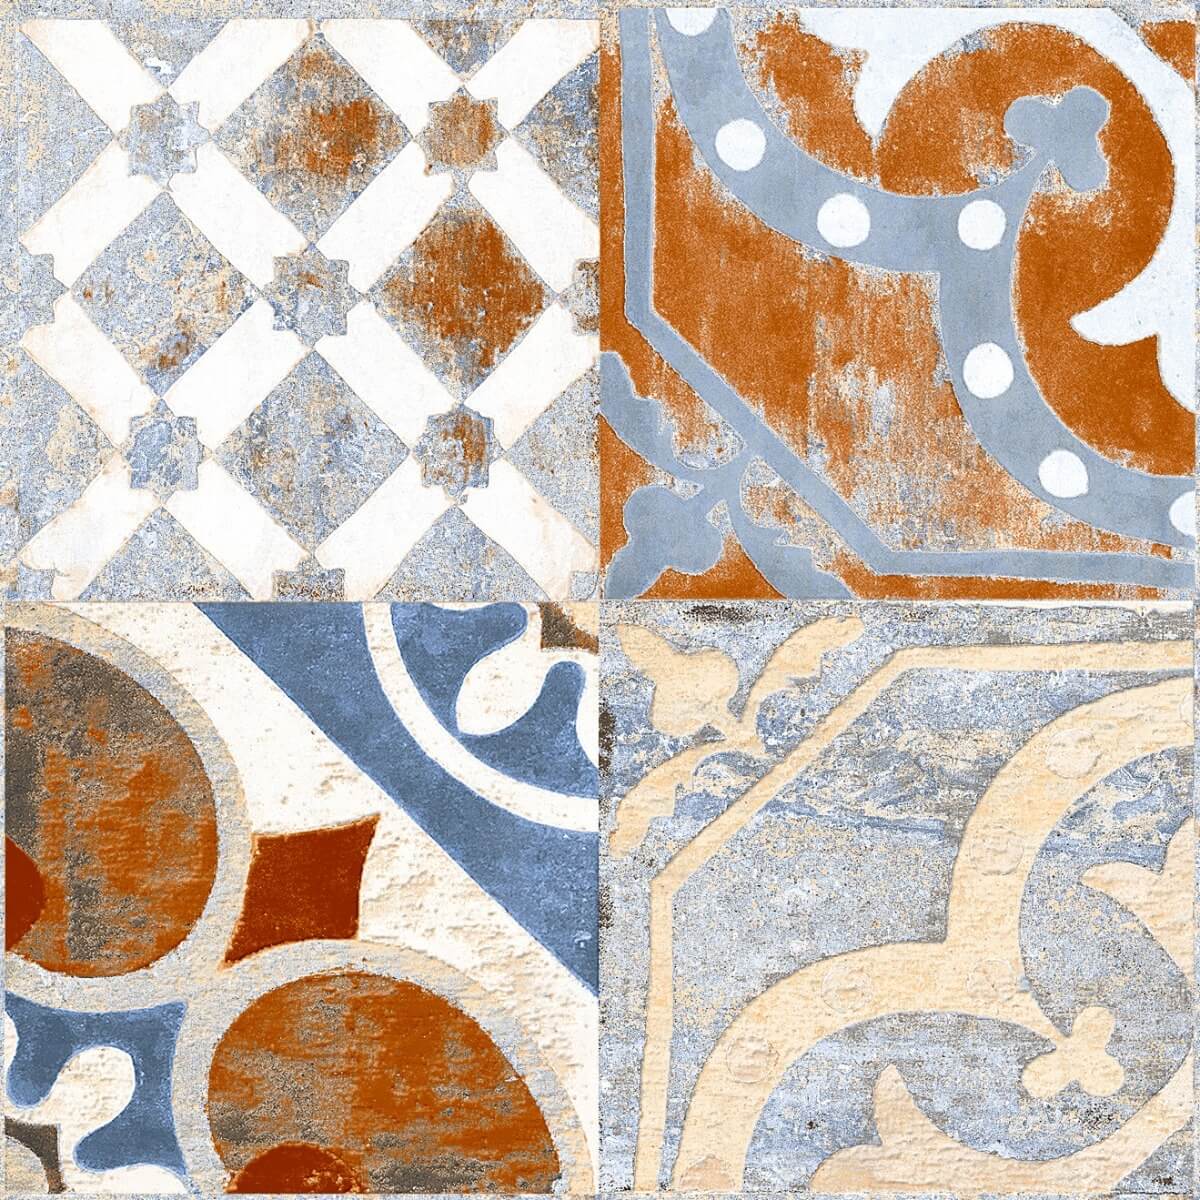 Blue Tiles for Accent Tiles, Dining Room Tiles, Hospital Tiles, Bar/Restaurant, Outdoor Area